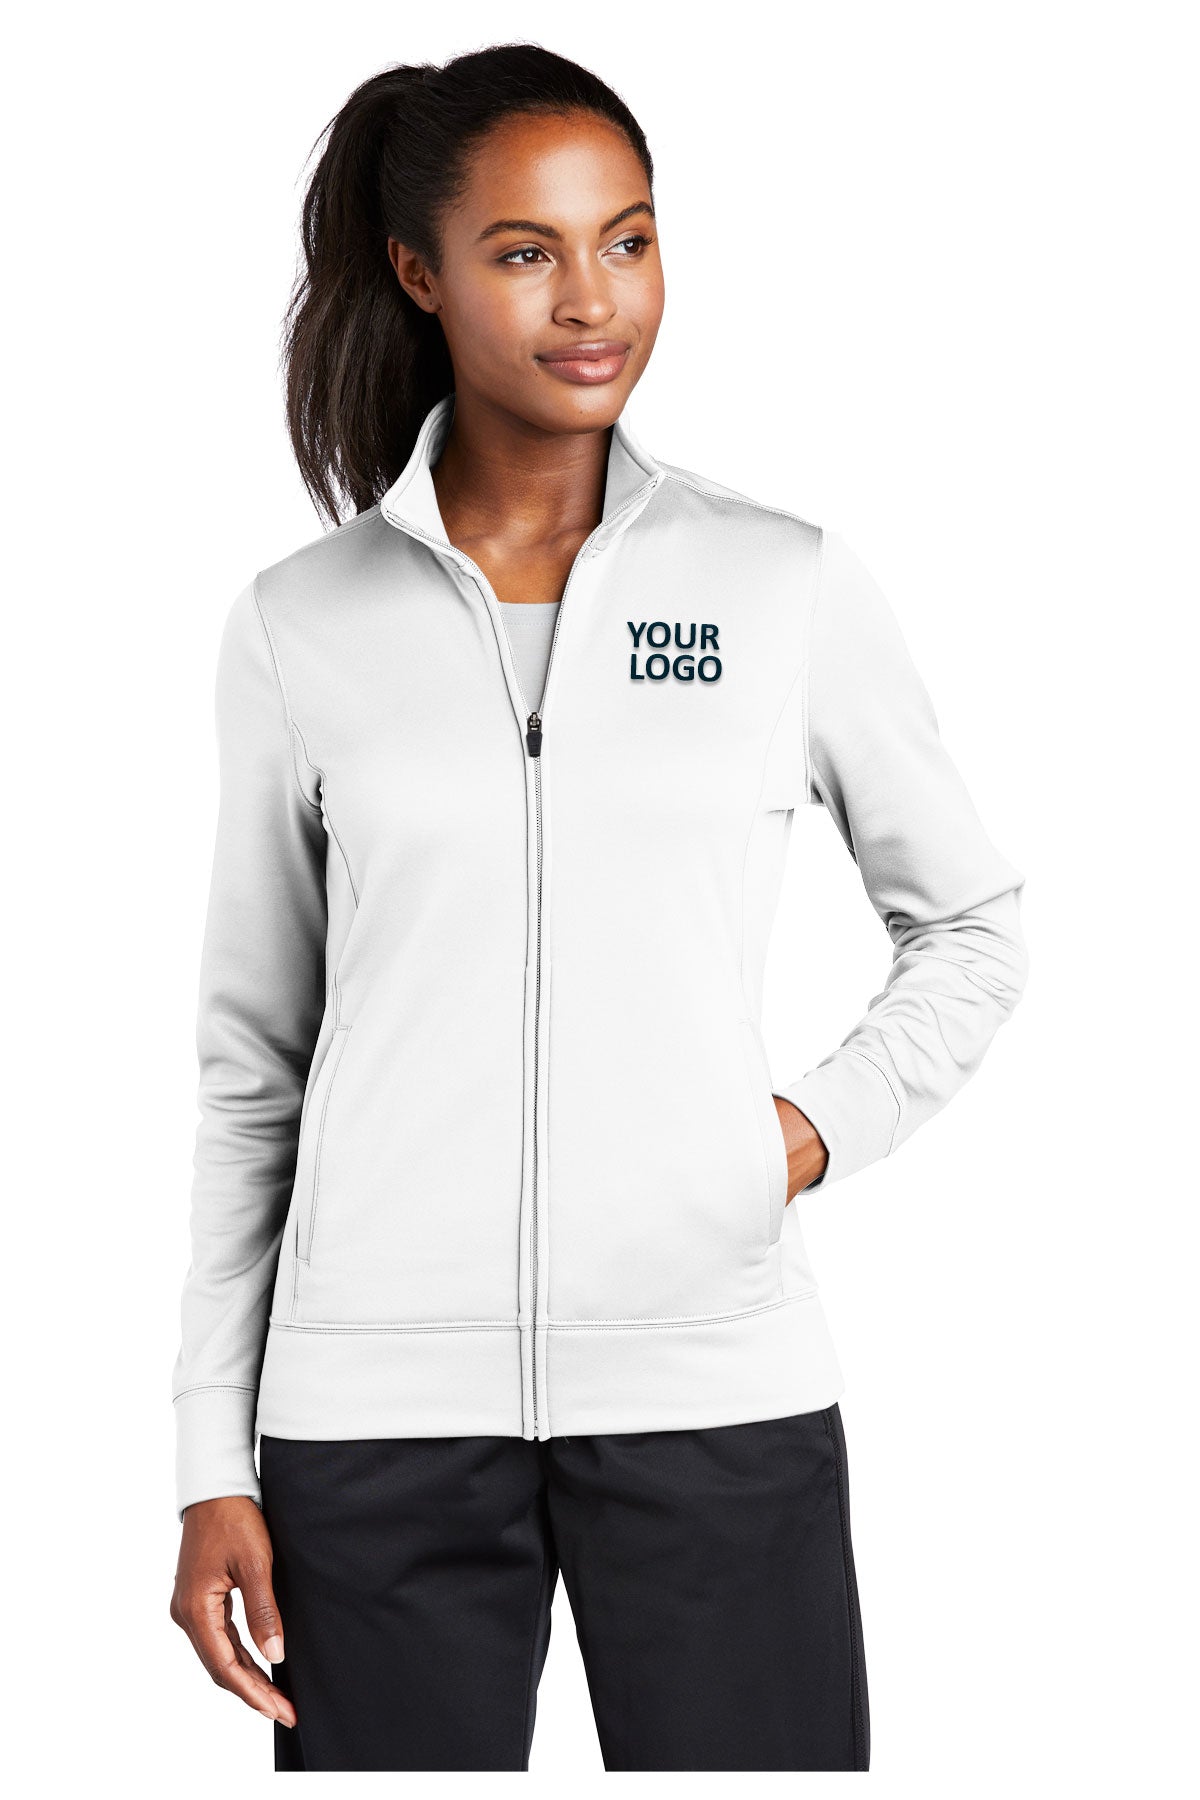 Sport-Tek White LST241 company jackets with logo